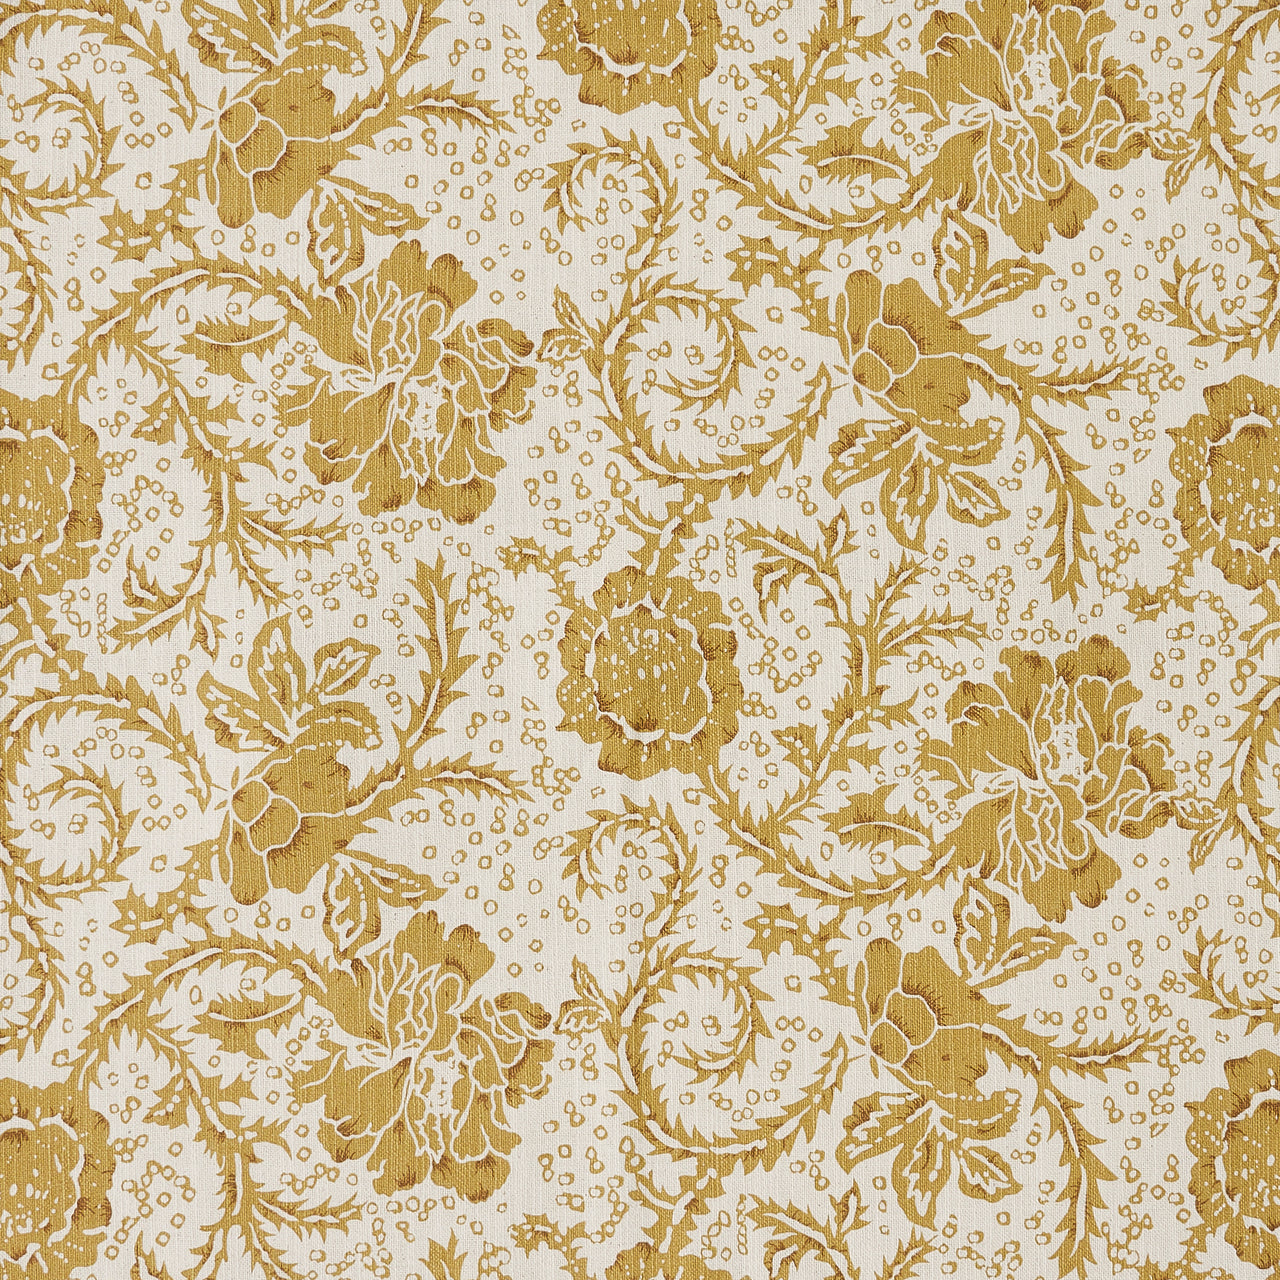 Dorset Gold Floral Fabric Euro Sham 26x26 VHC Brands